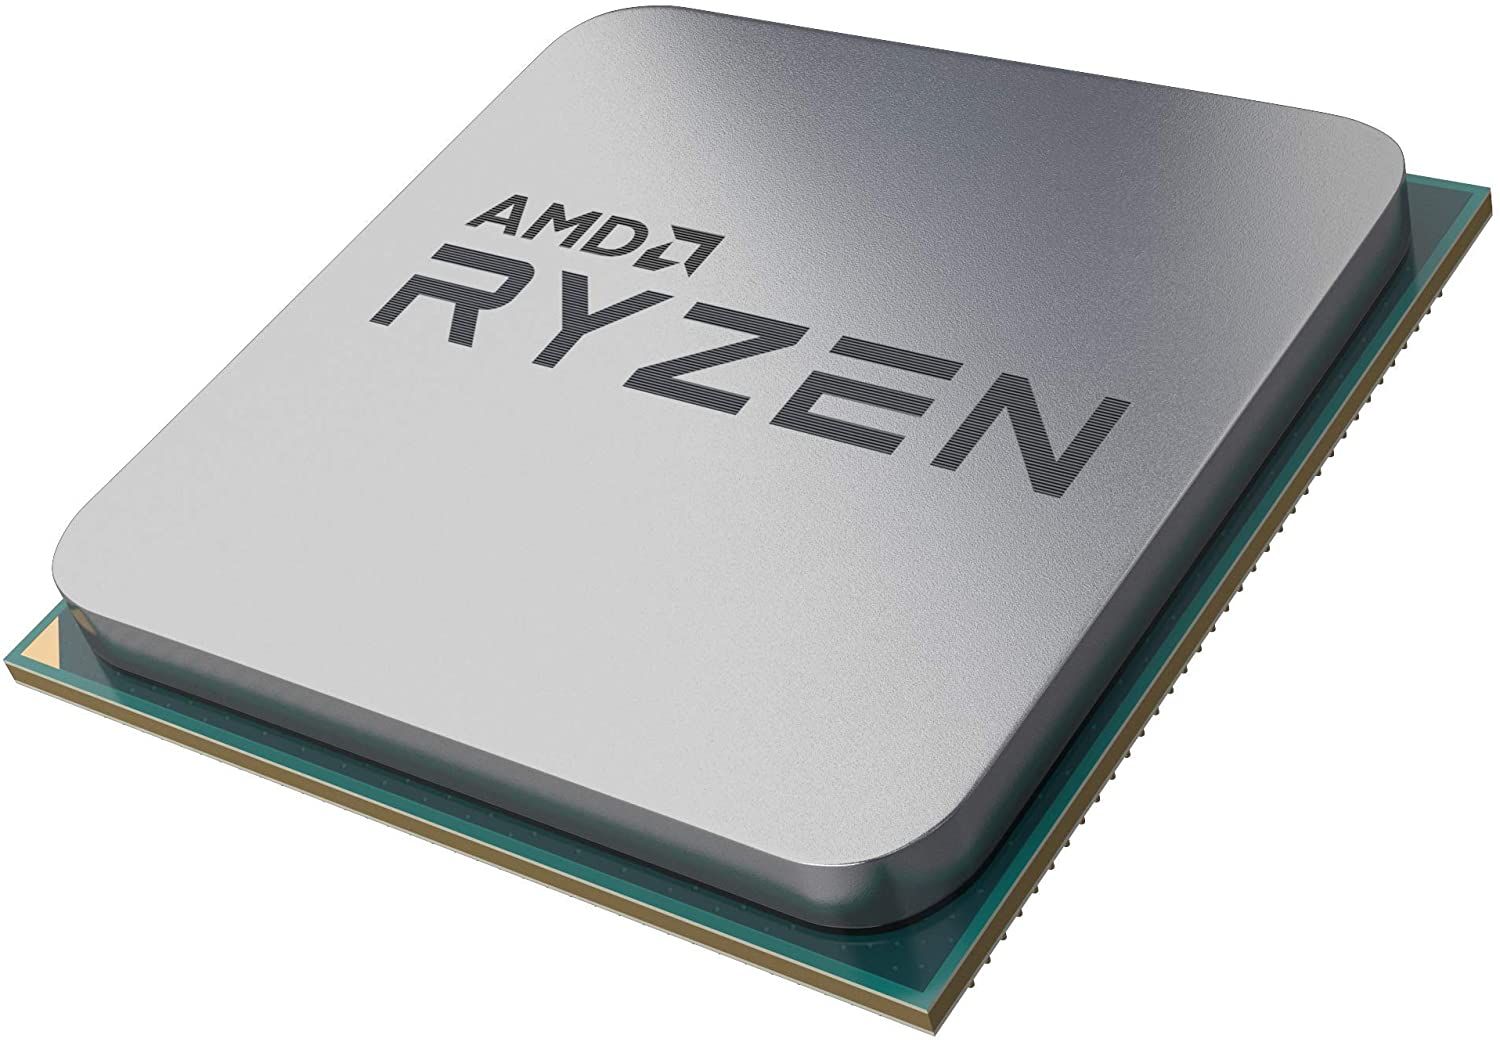 AMD Ryzen 5 2600 Processor c